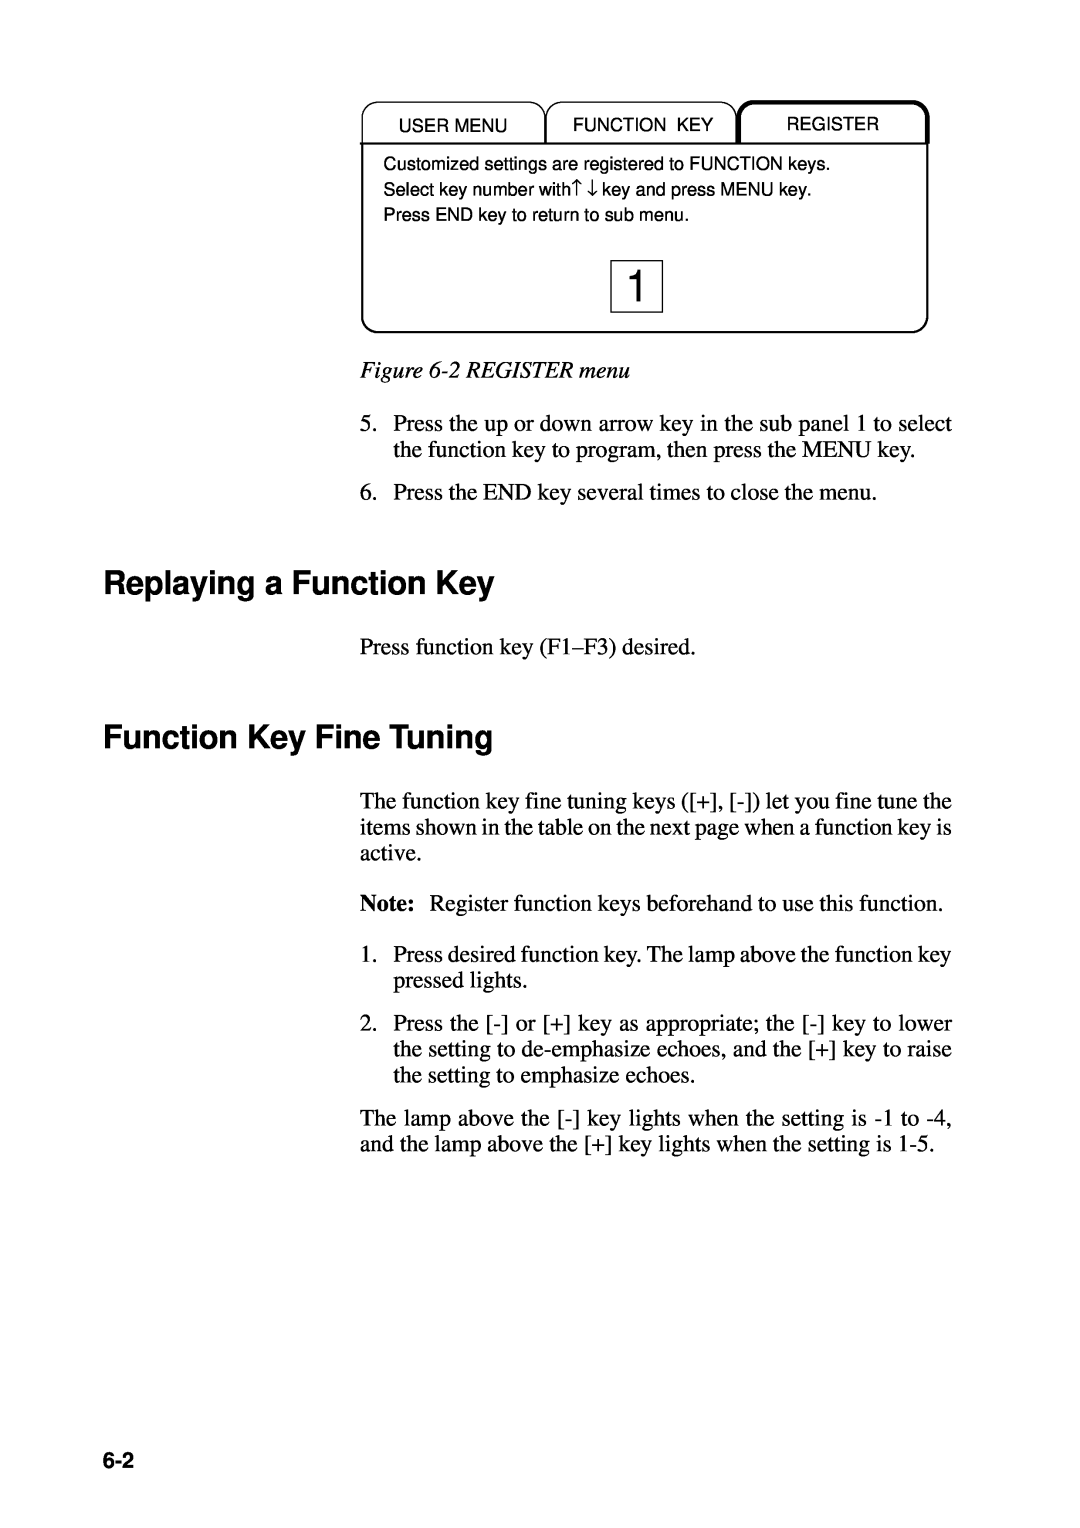 Furuno CSH-53 manual Replaying a Function Key, Function Key Fine Tuning, 2 REGISTER menu 